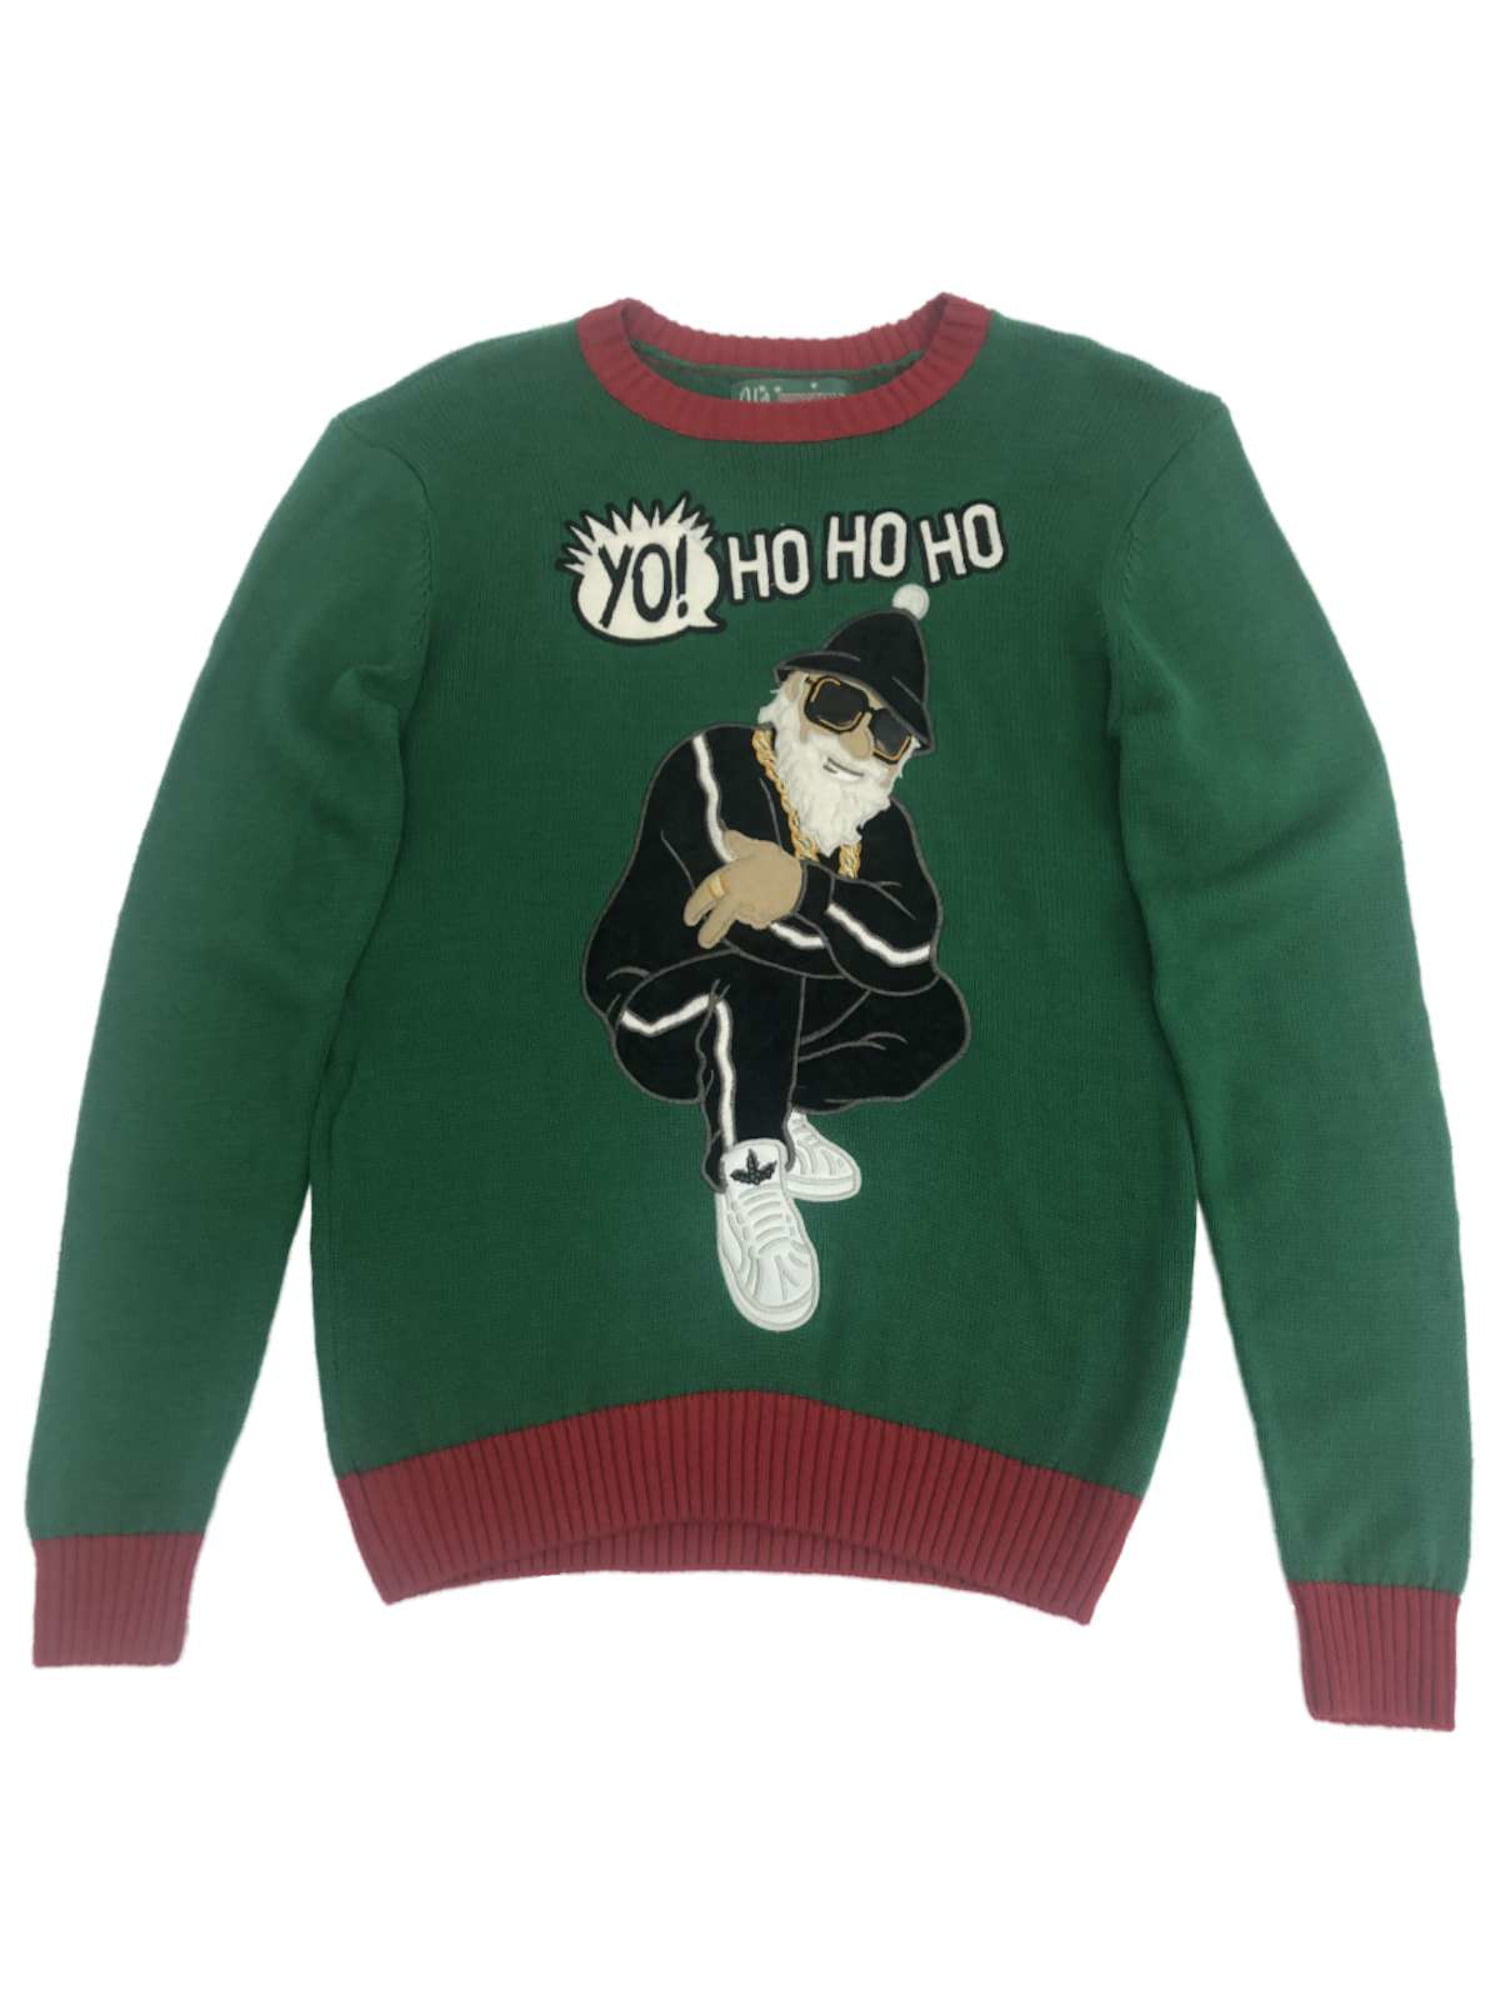 Santa is My Ho Ho Homie Long Sleeve T-Shirt Fun Ugly Sweater Merry Christmas Tee 